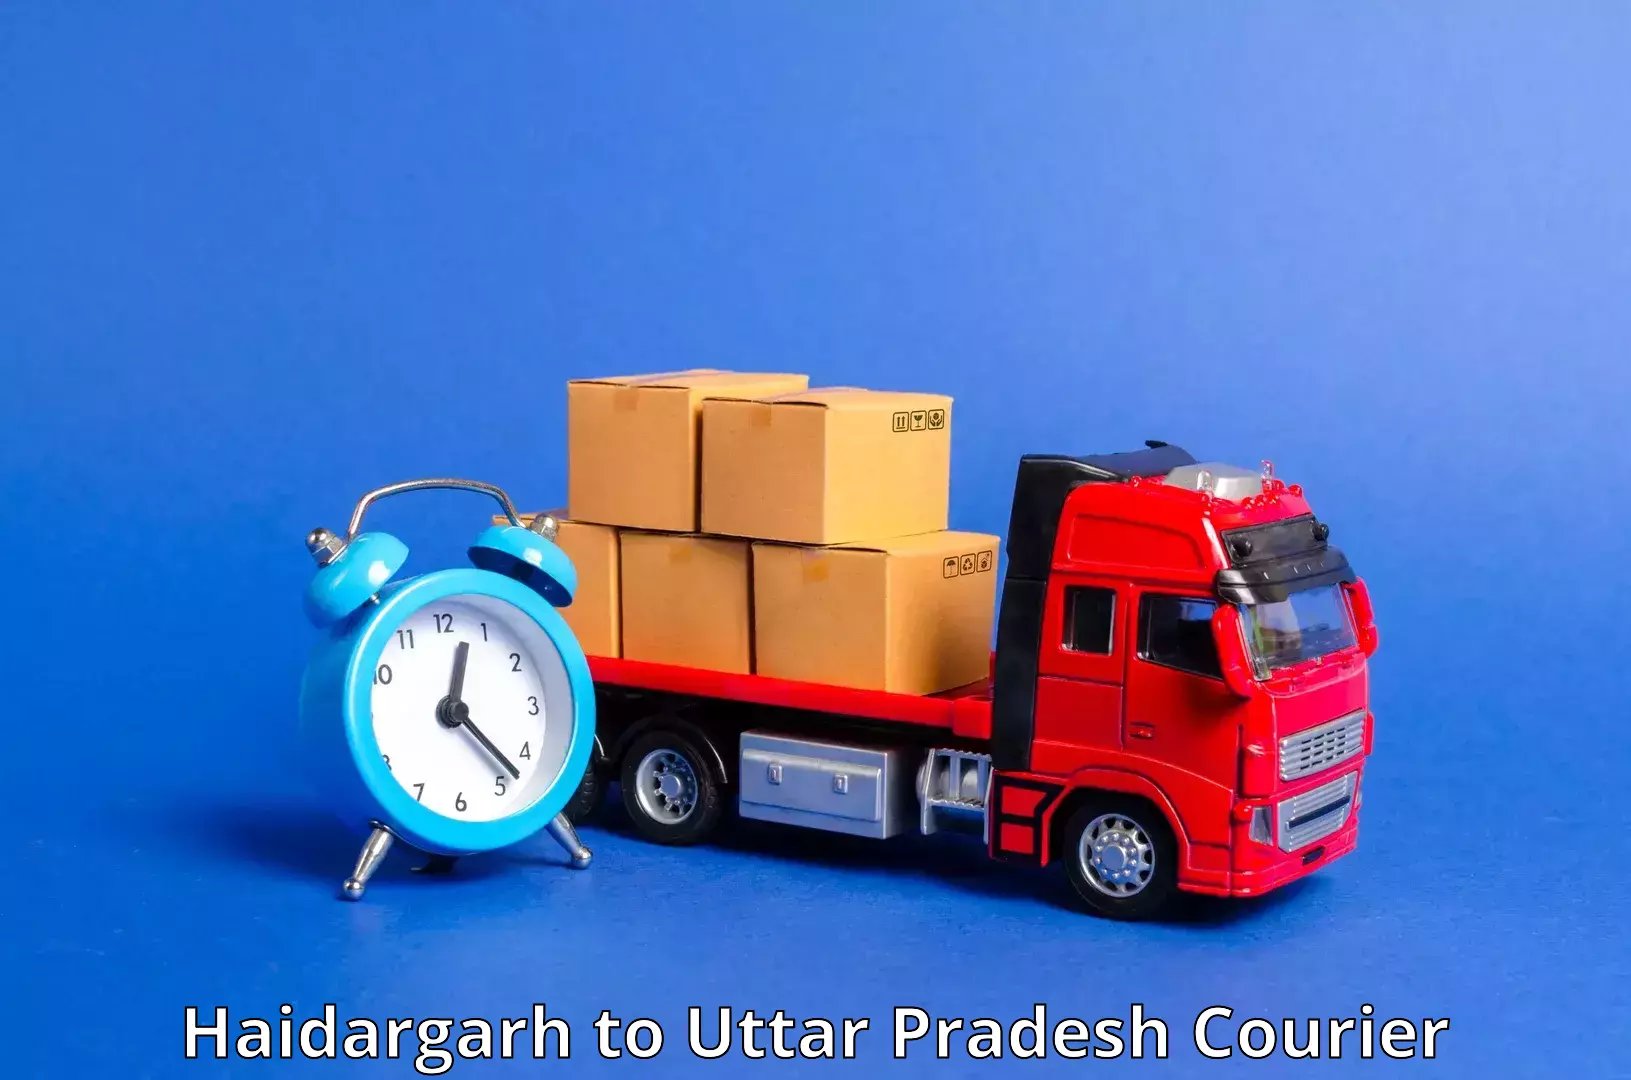 Package tracking Haidargarh to Hapur